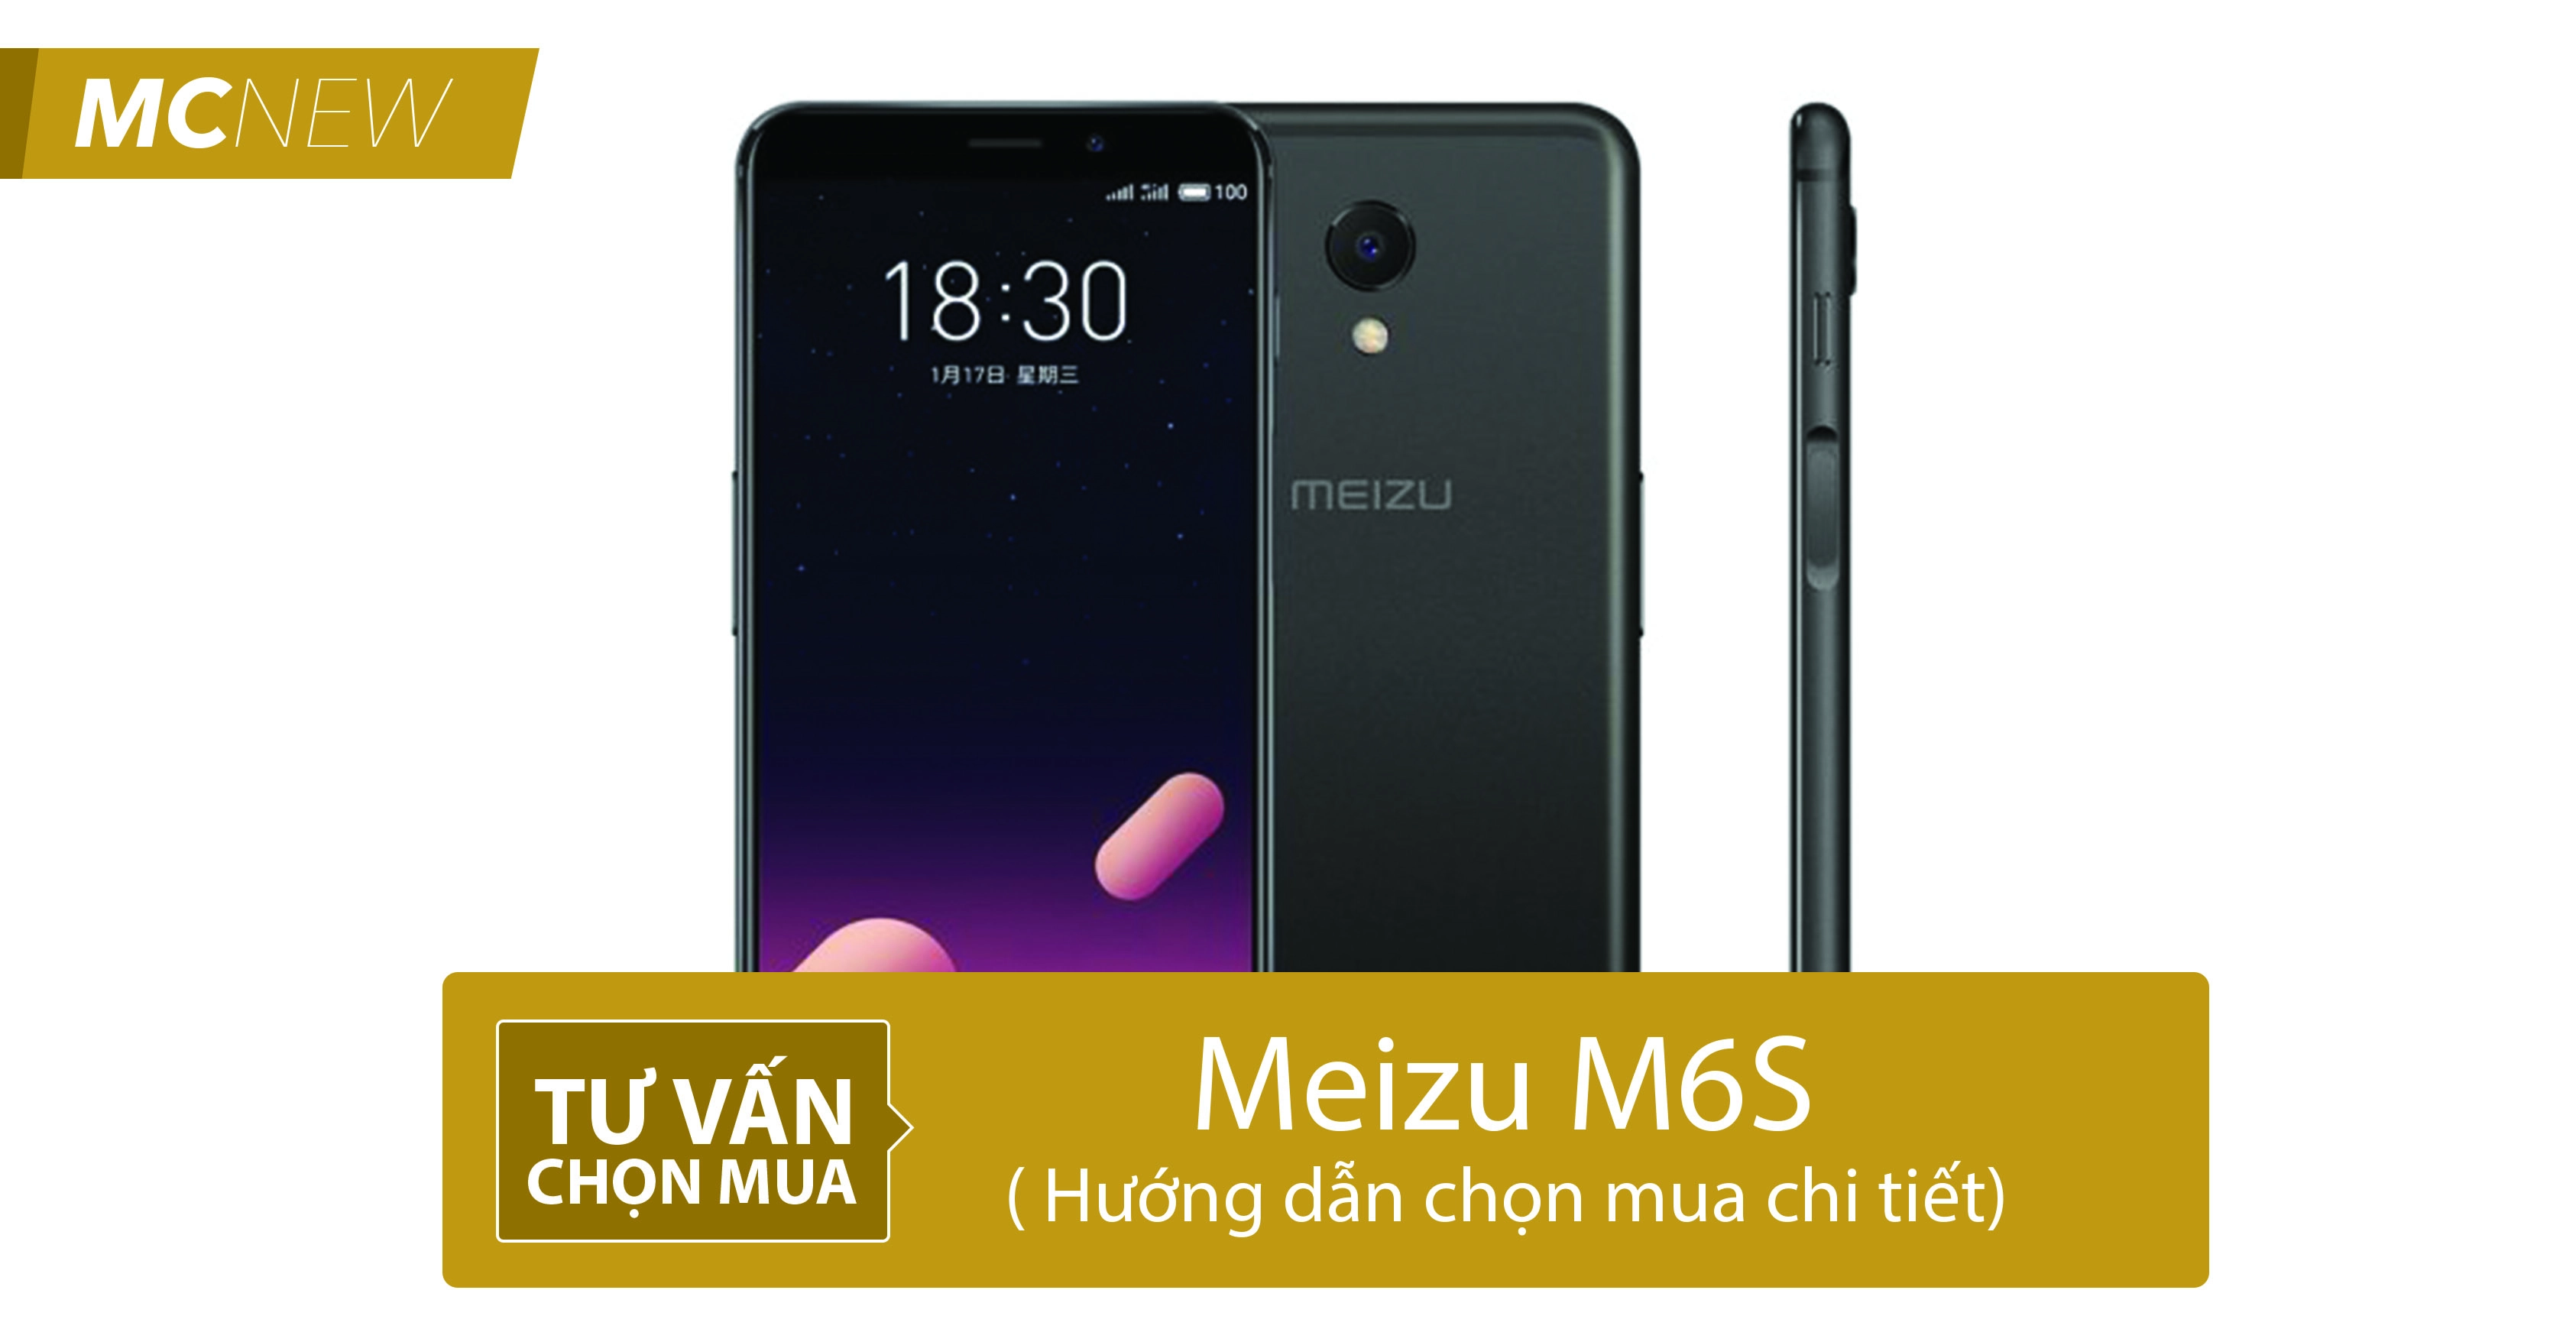 Hướng dẫn chọn mua Meizu M6S